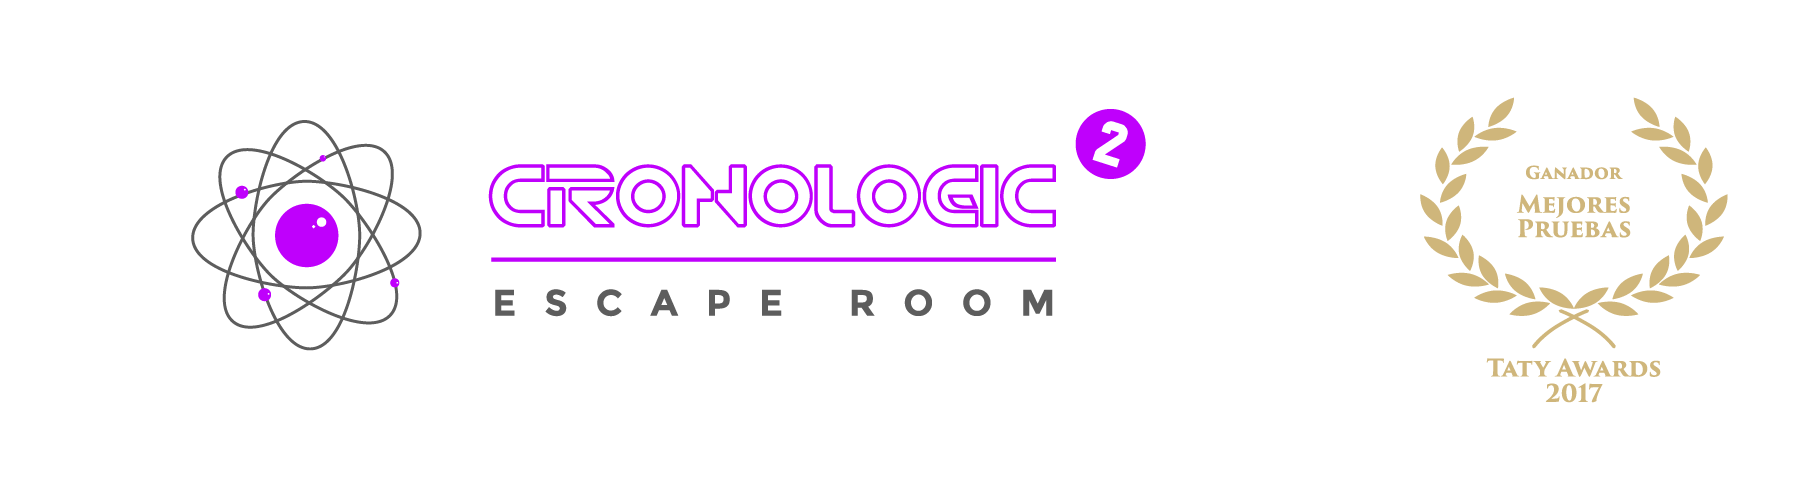 Cronologic 2 Room Escape